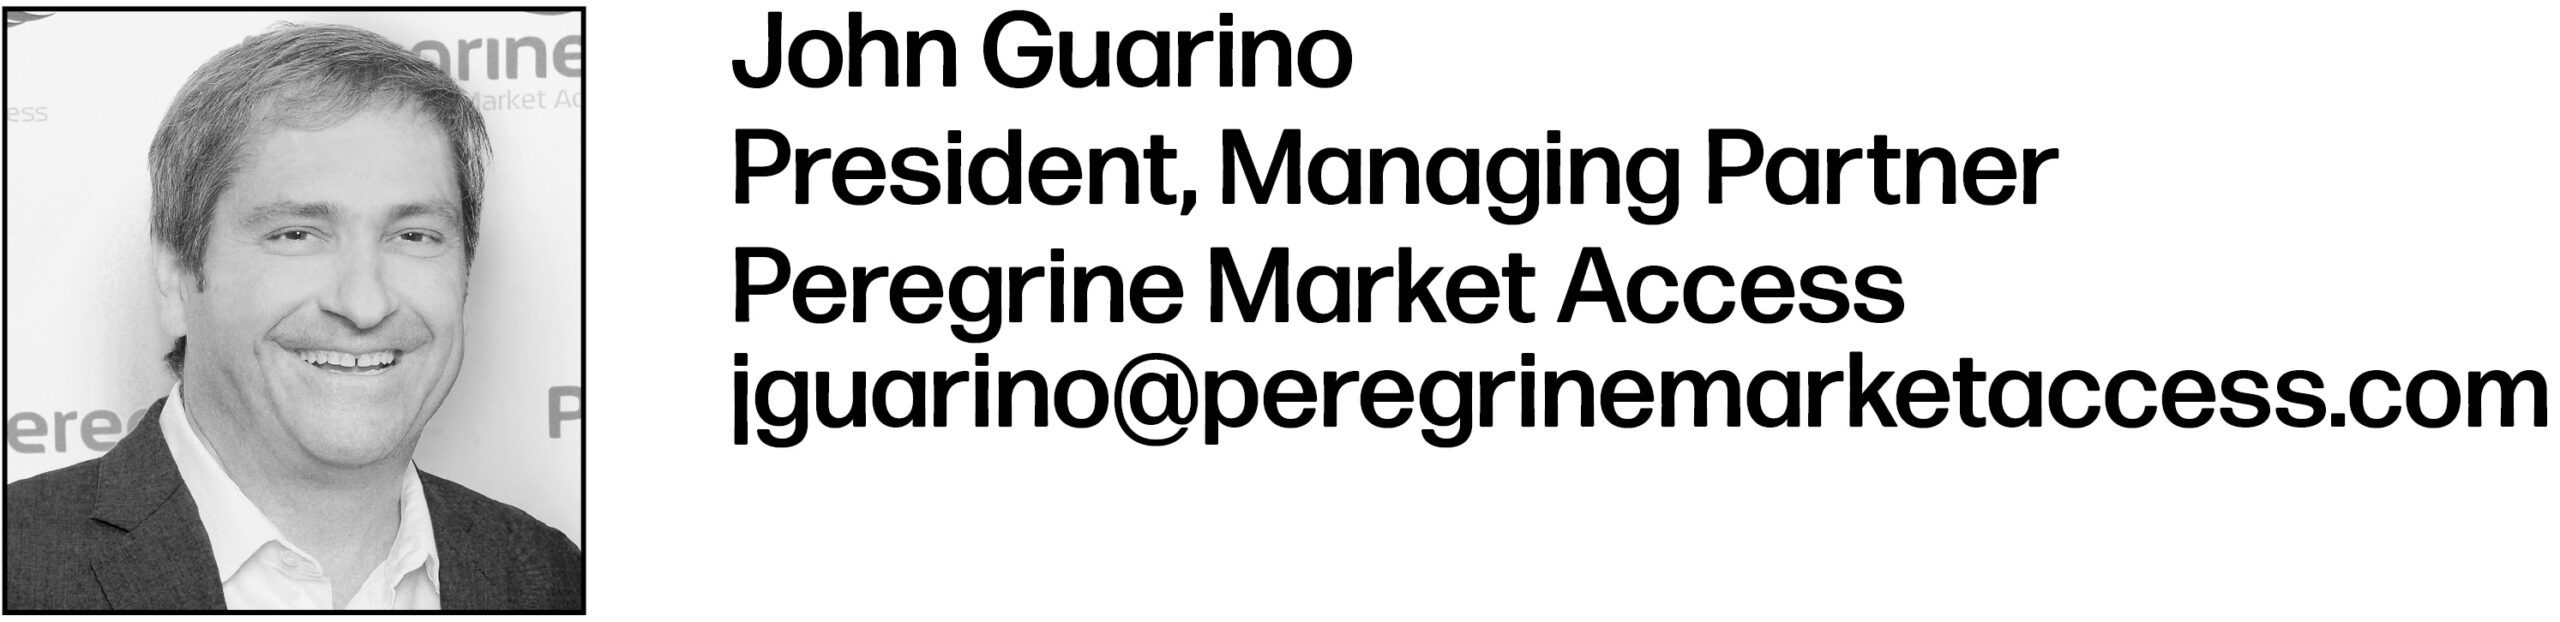 John Guarino is President, Managing Partner at Peregrine Market Access. His email is jguarino@peregrinemarketaccess.com.